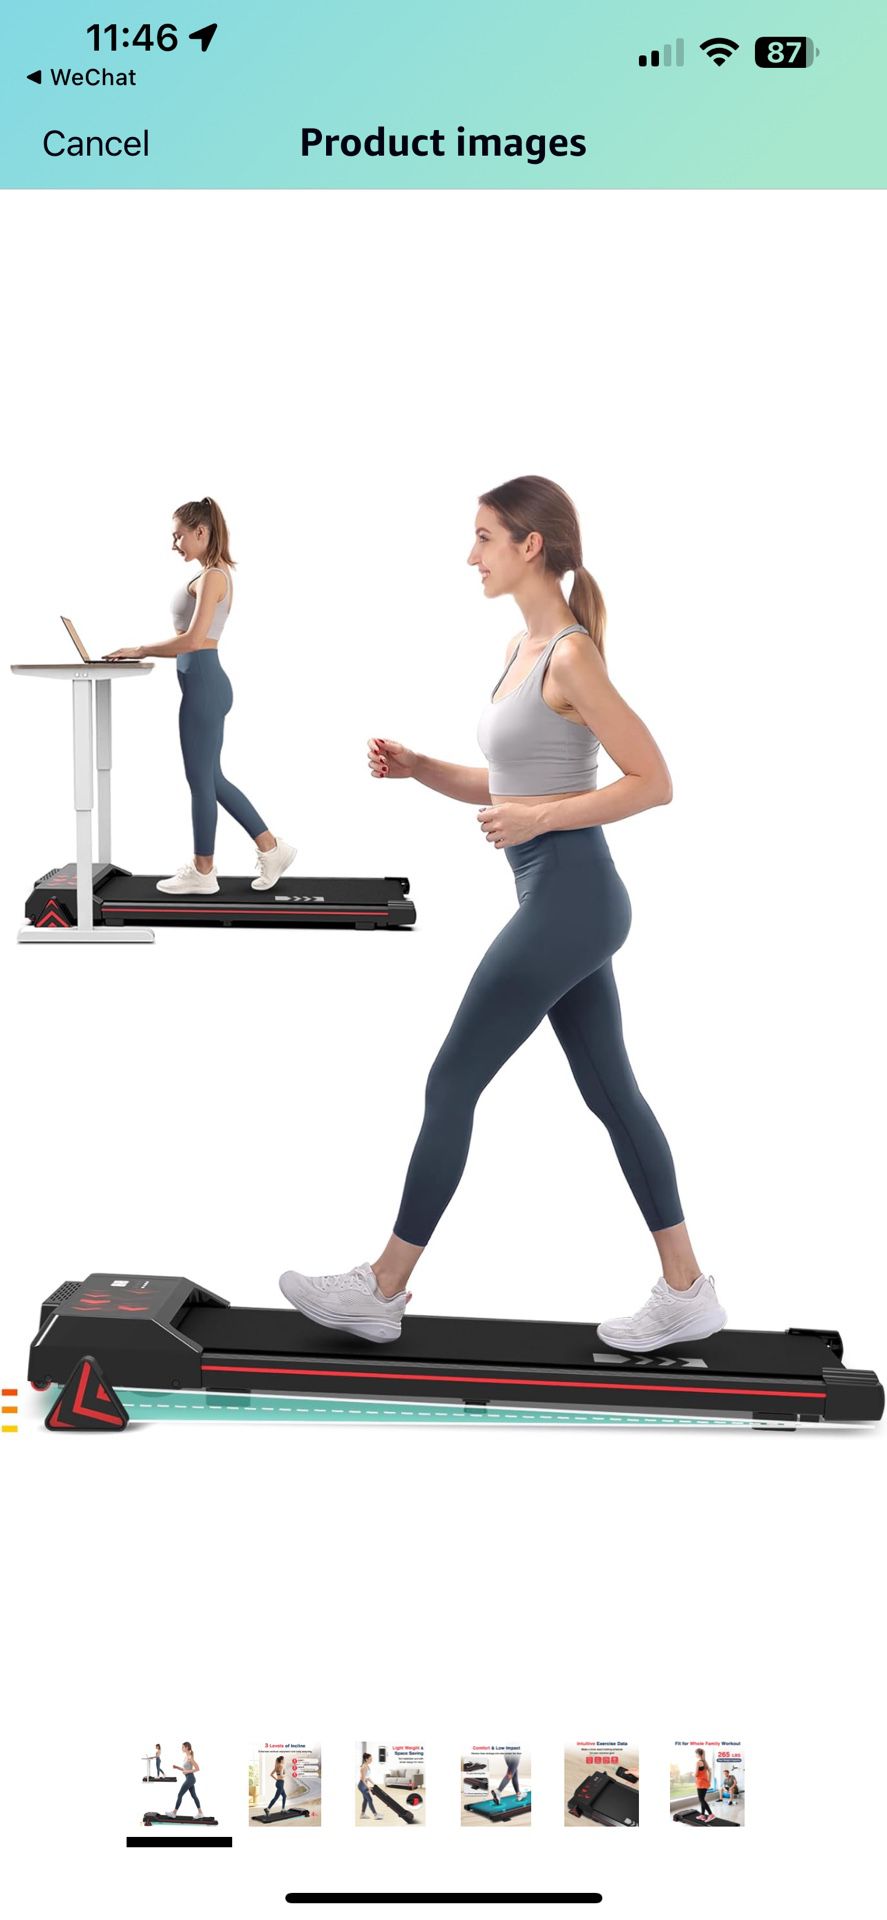 Brand New Treadmill for Sale!